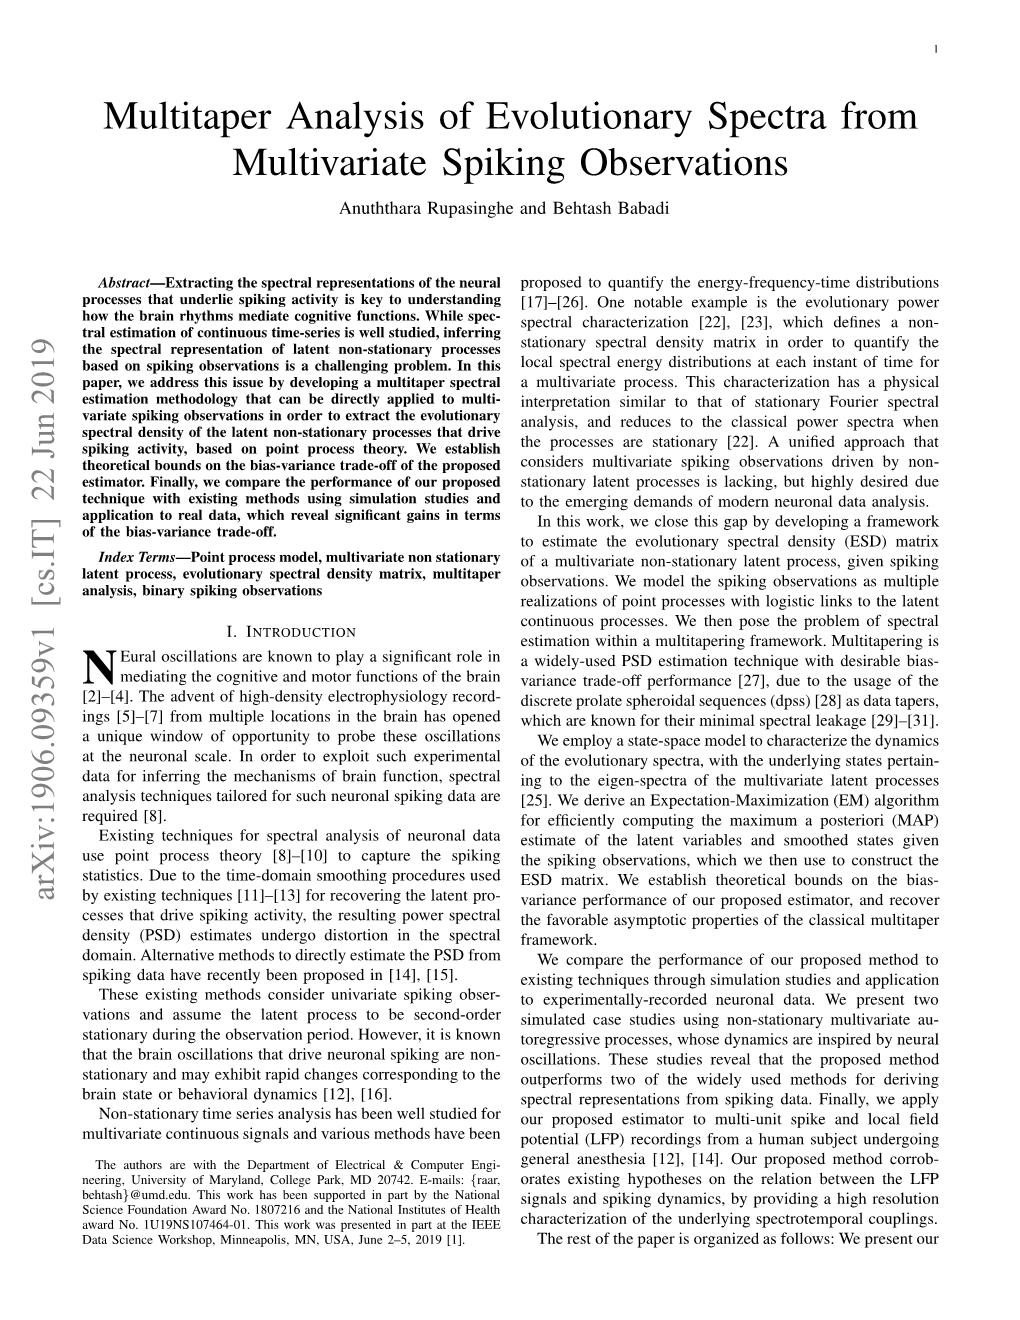 Multitaper Analysis of Evolutionary Spectra from Multivariate Spiking Observations